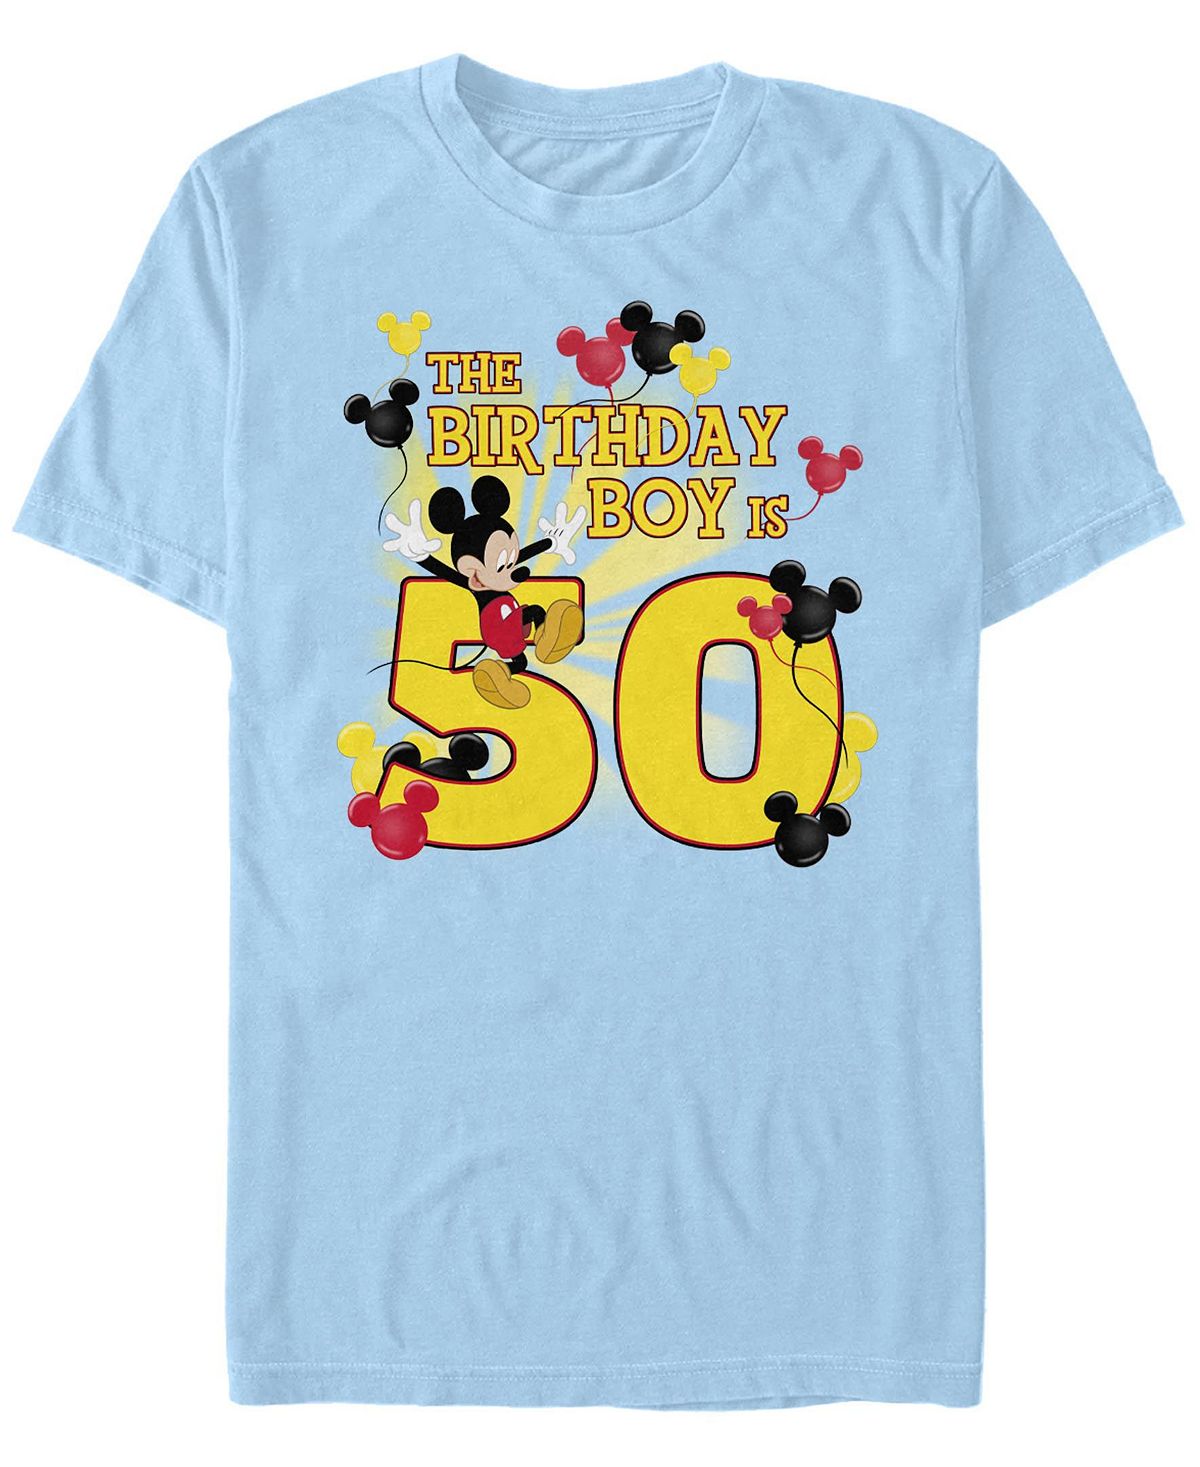 Мужская футболка с круглым вырезом и короткими рукавами mickey birthday 50 Fifth Sun, светло-синий мужская футболка mickey irish с короткими рукавами и круглым вырезом fifth sun зеленый